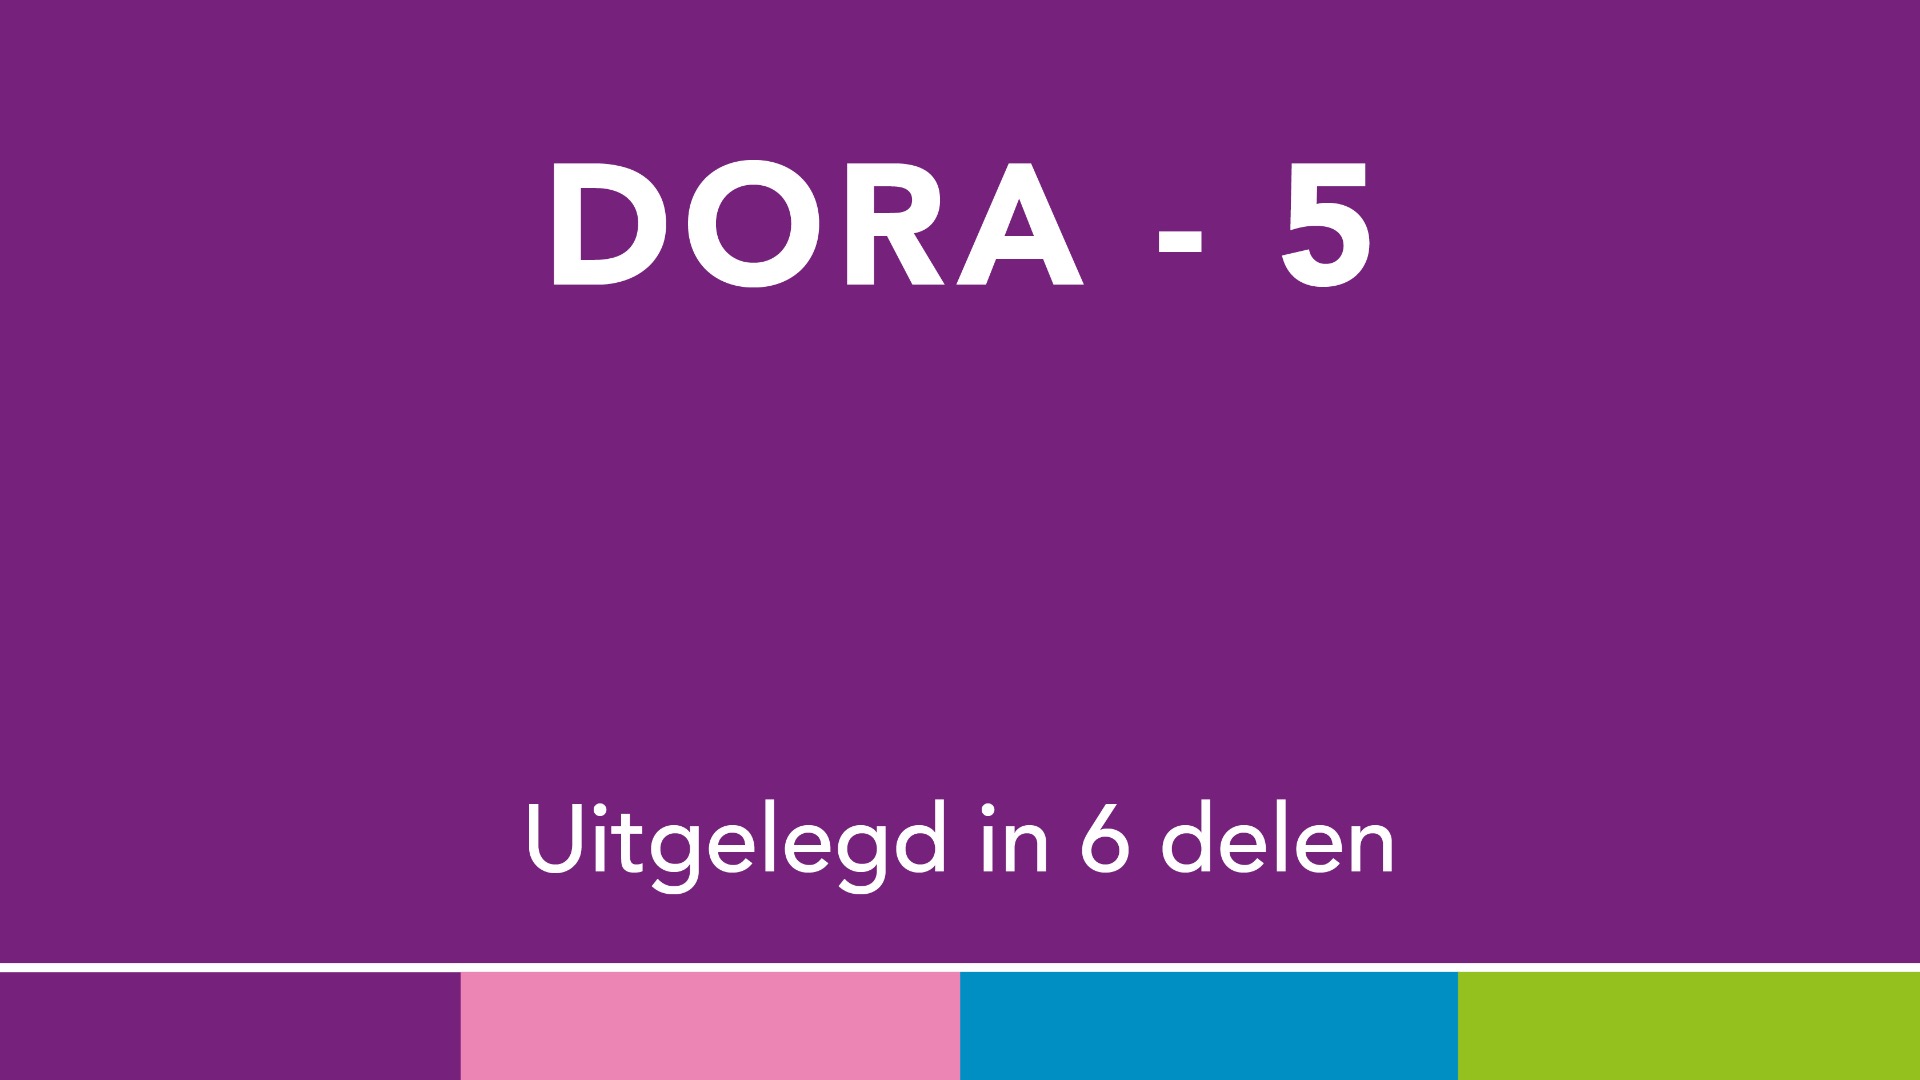 DORA - 5